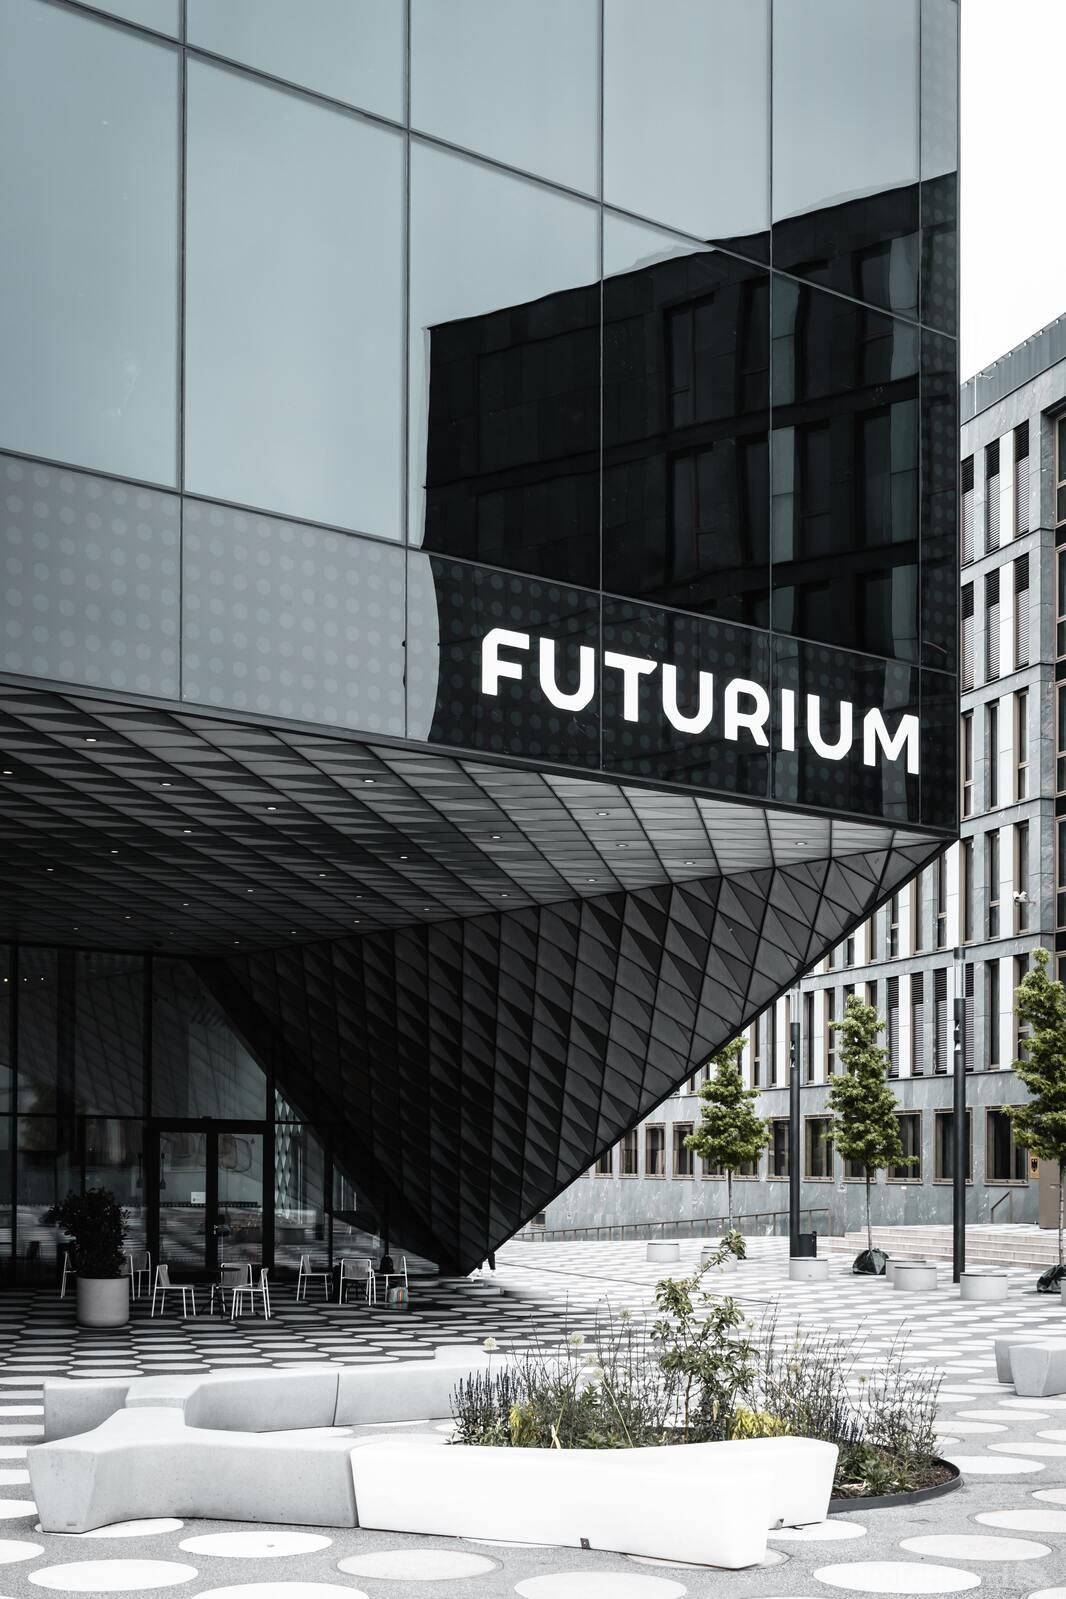 Image of Futurium by Team PhotoHound